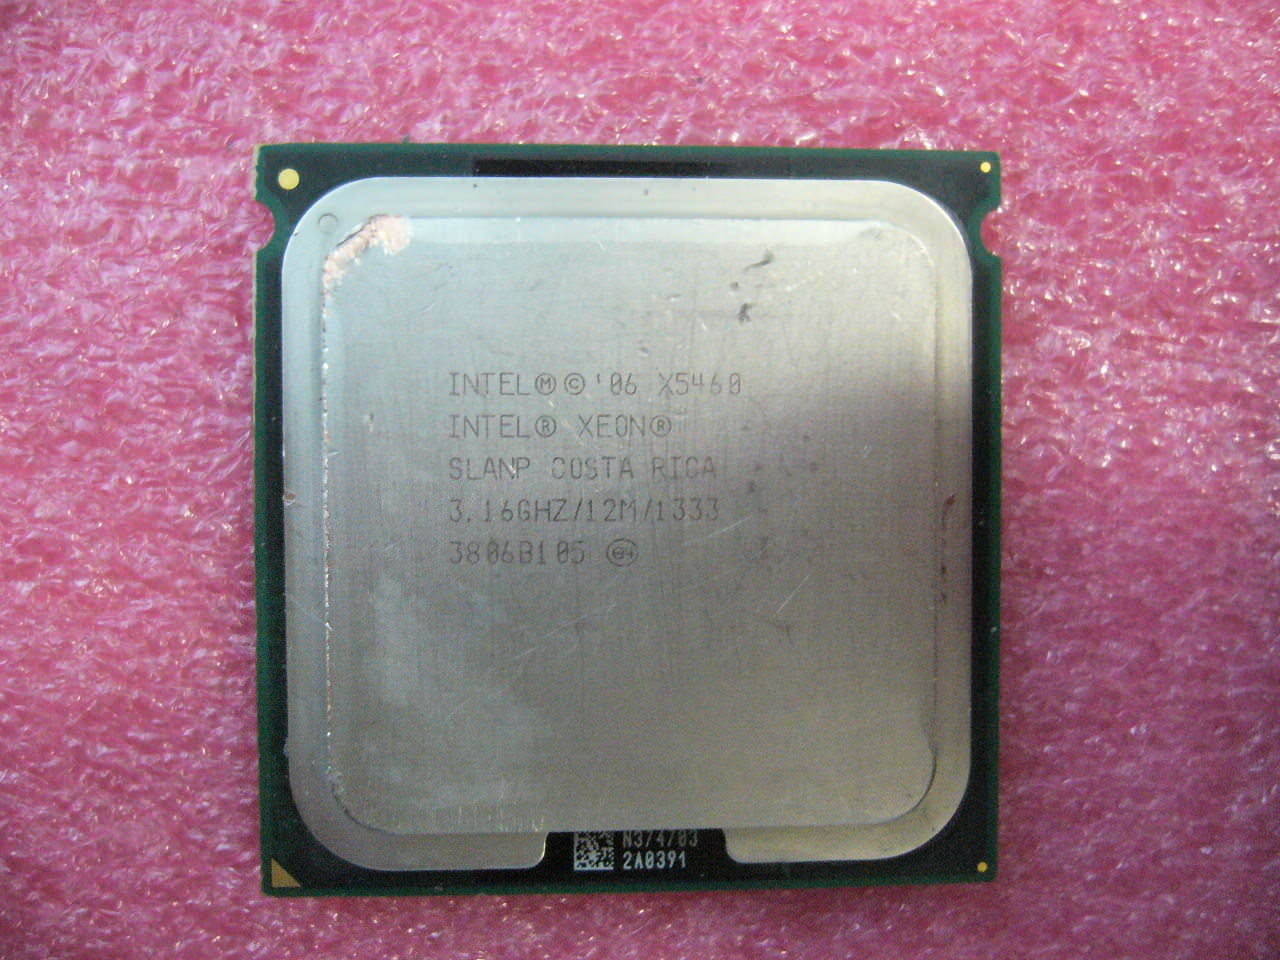 QTY 1x Intel Xeon CPU Quad Core X5460 3.16Ghz/12MB/1333Mhz LGA771 SLANP